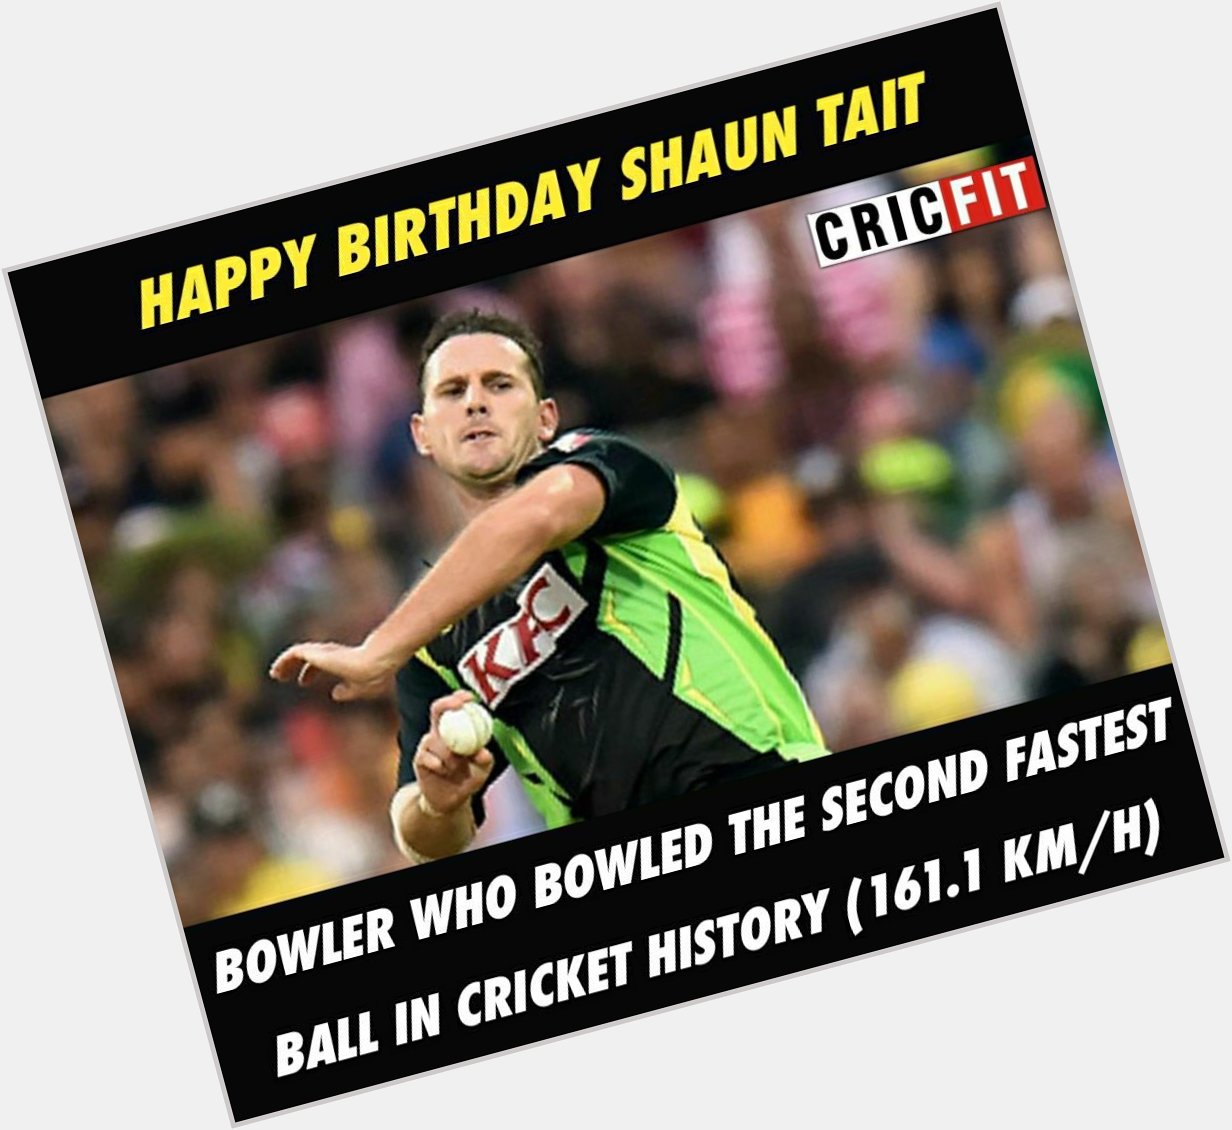 Happy Birthday Shaun Tait ! 